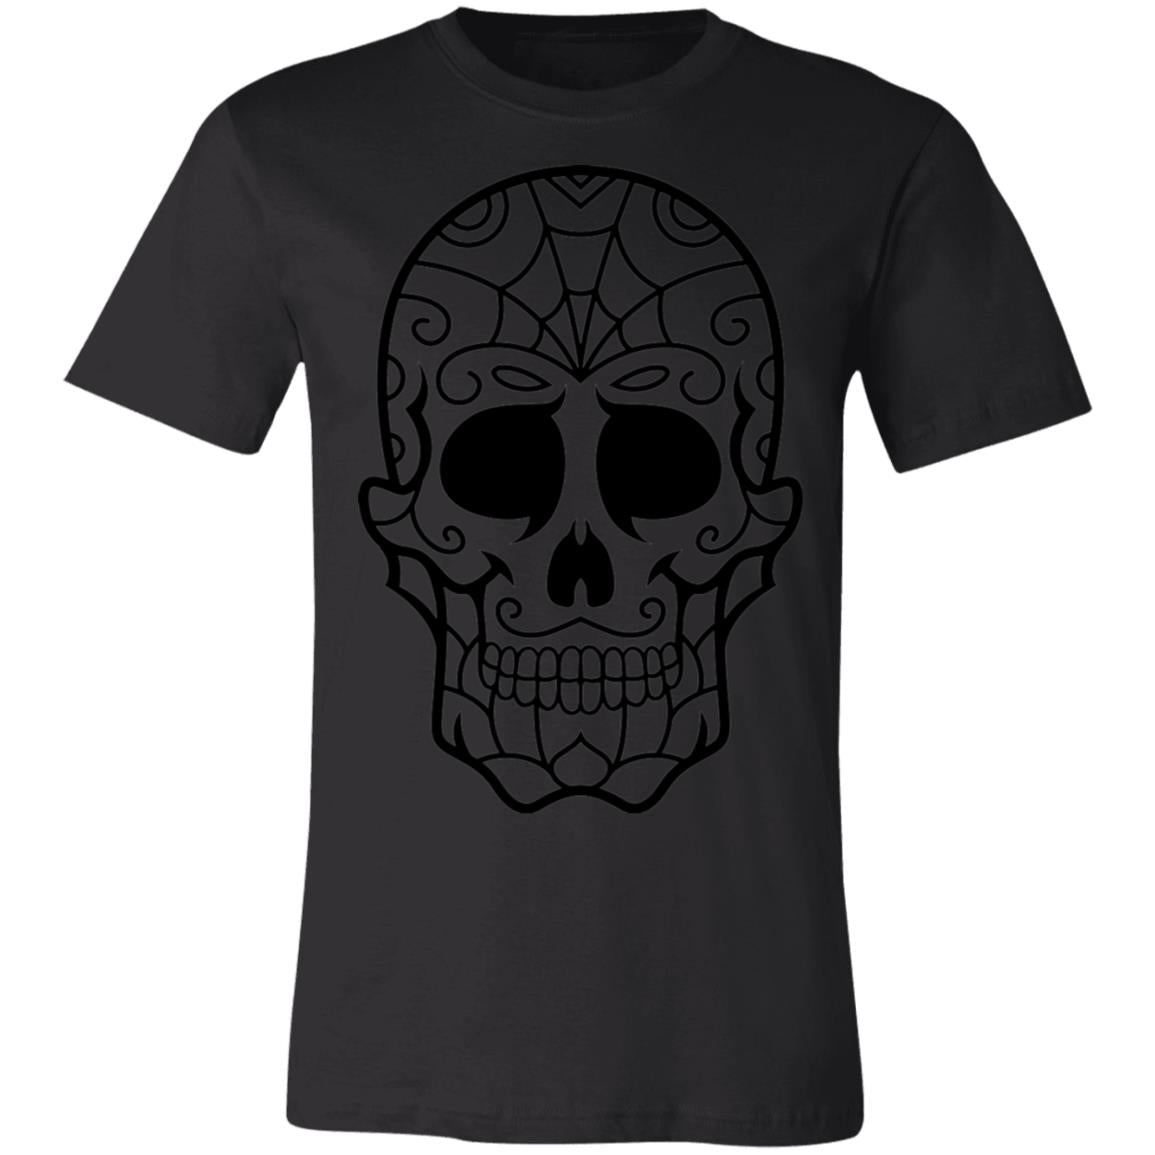 Skull 123 Santa Muerte Shirt-Express Your Love Gifts